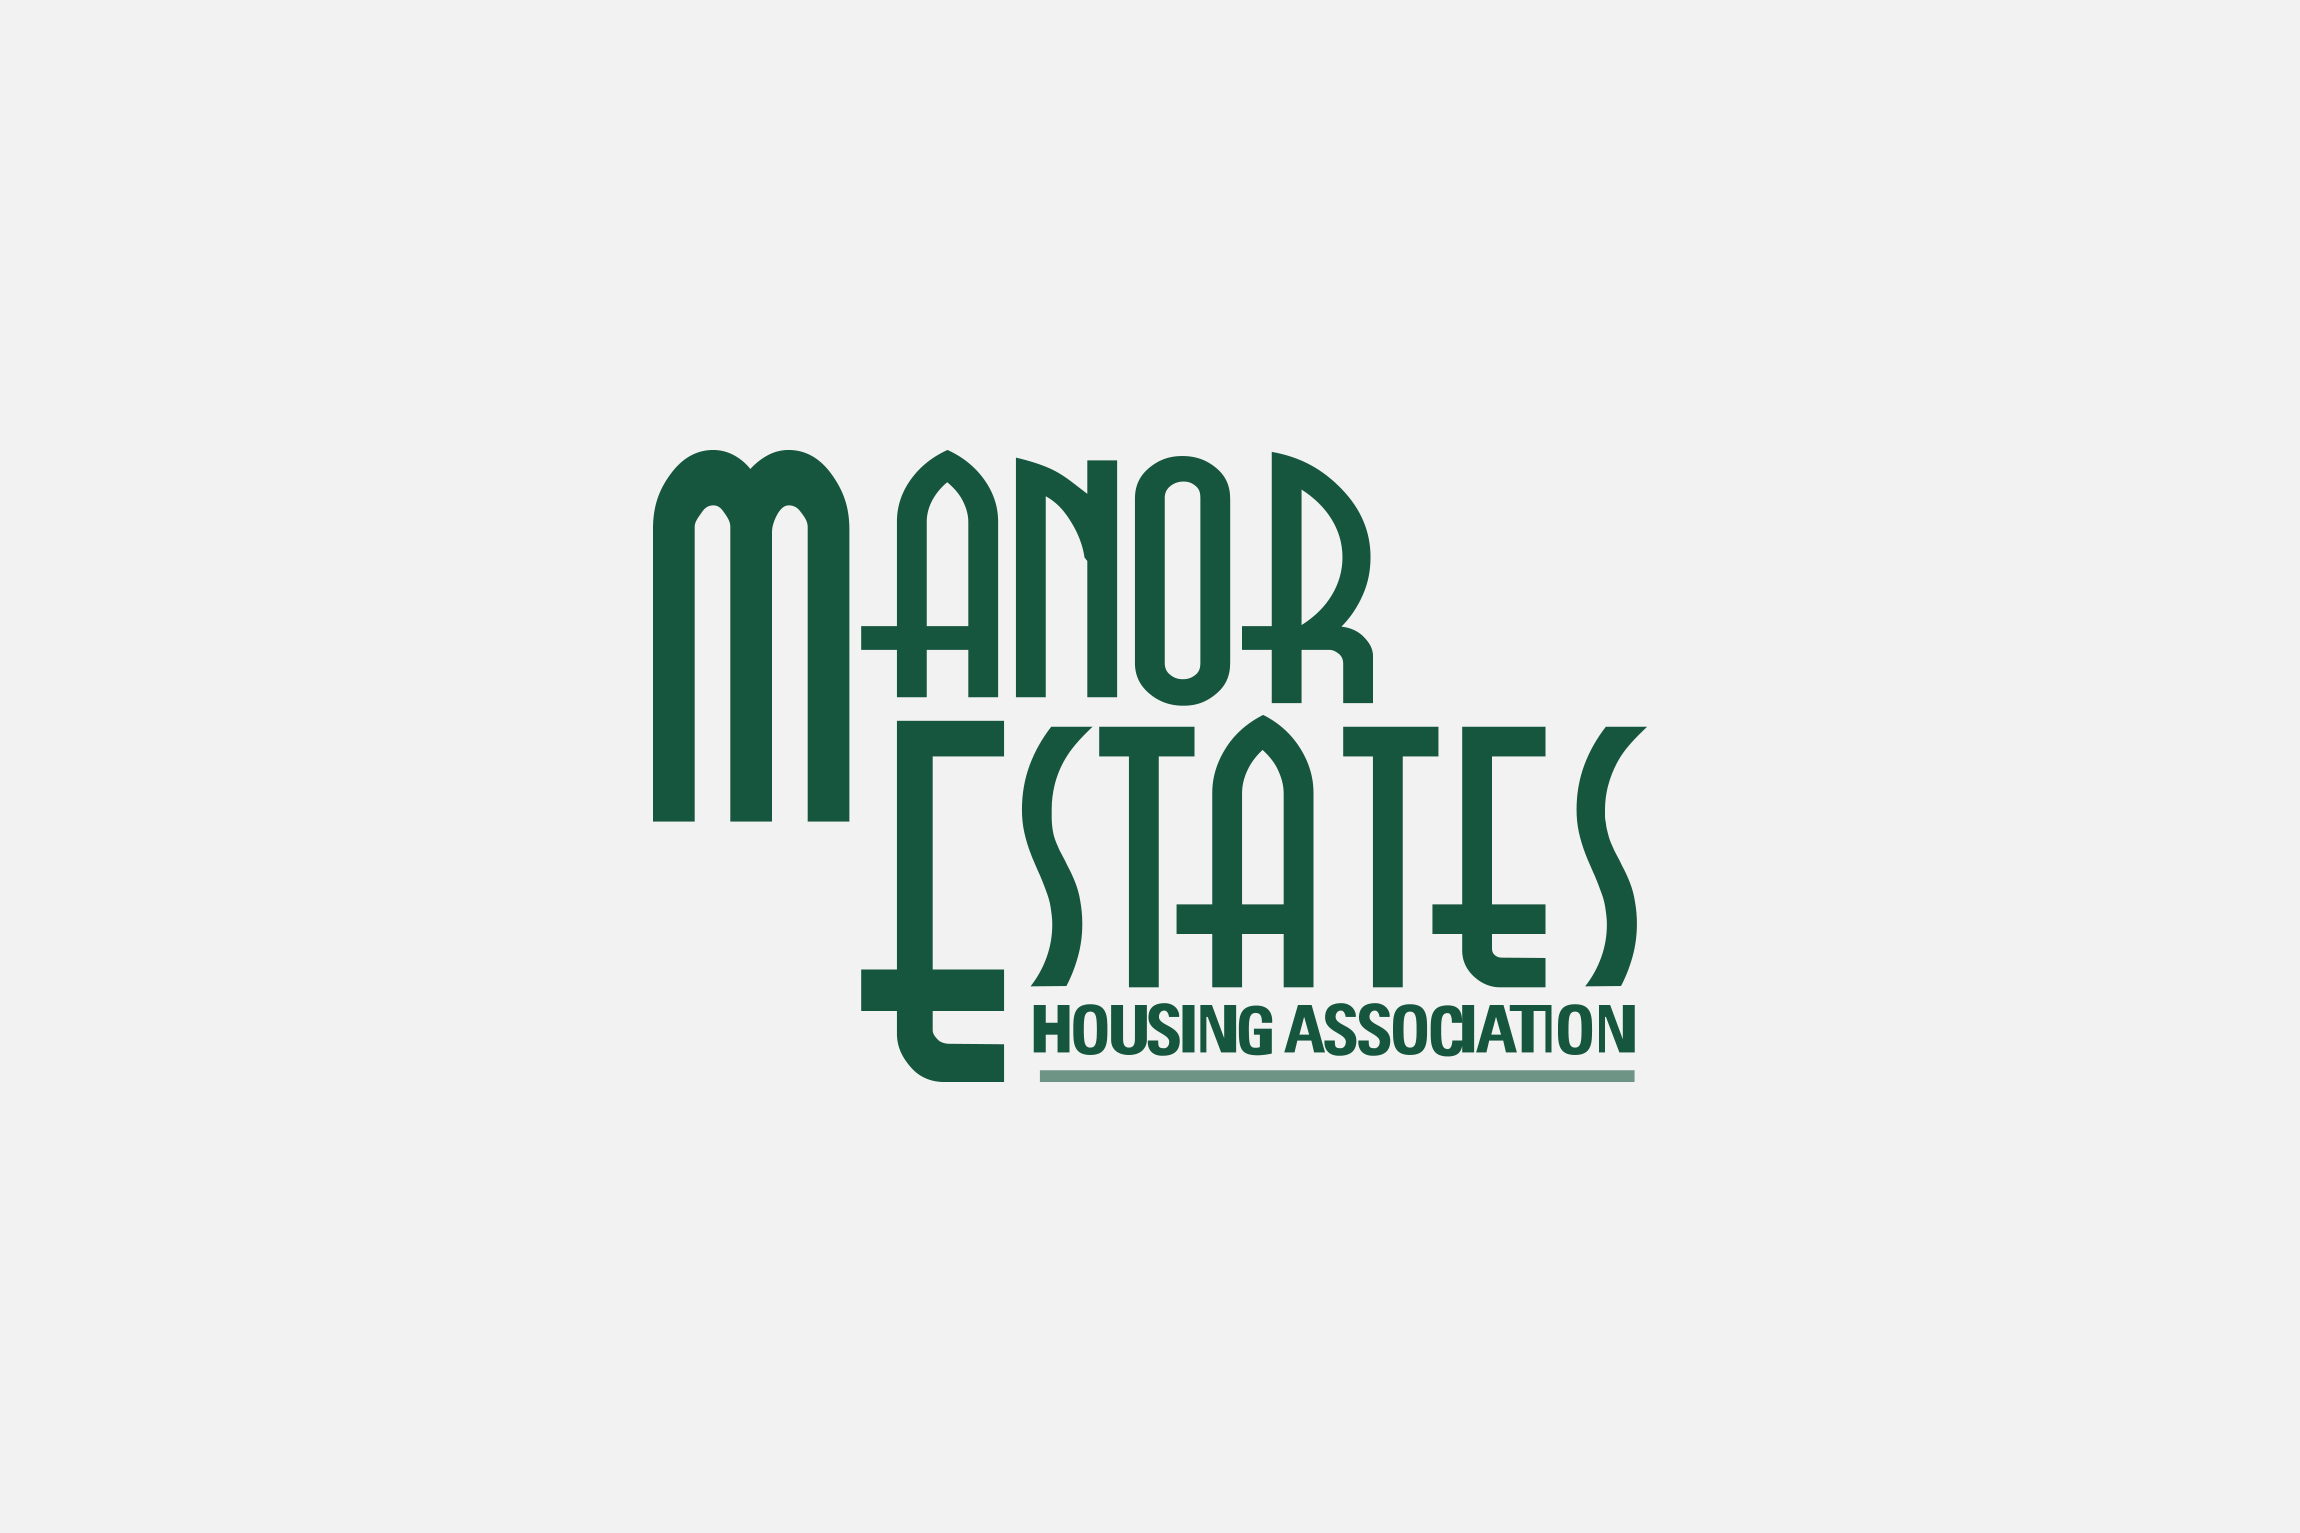 manor-estates-brand-identity